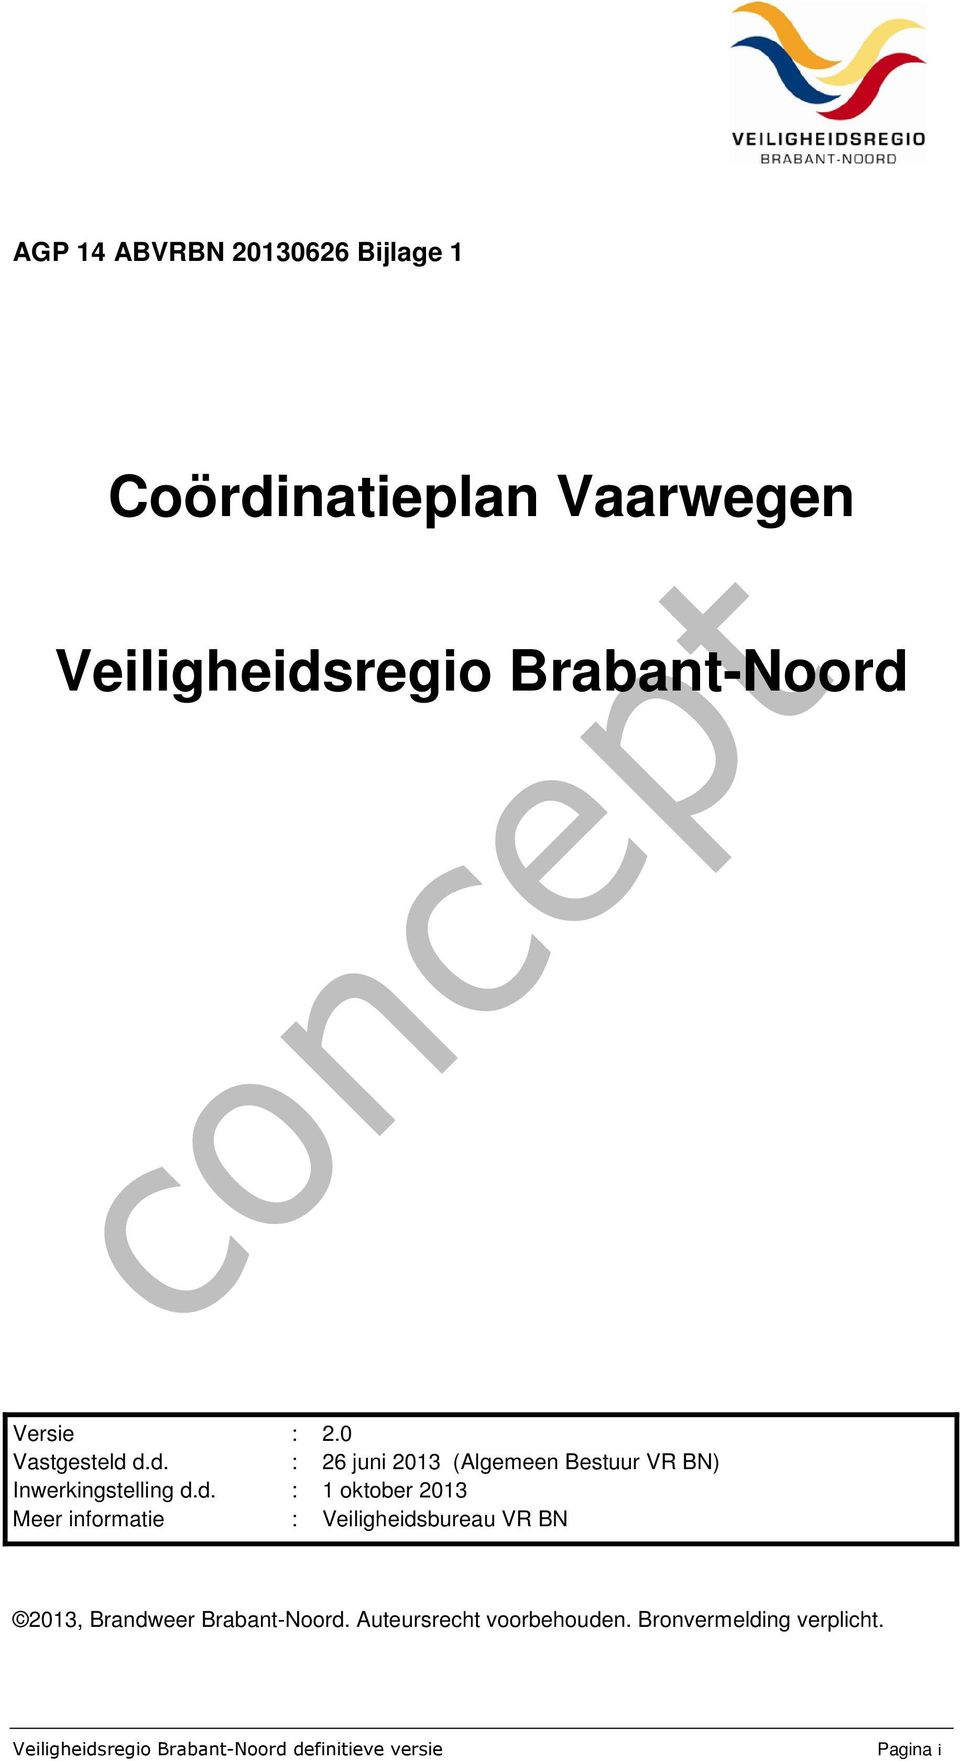 d.d. : 26 juni 2013 (Algemeen Bestuur VR BN) Inwerkingstelling d.d. : 1 oktober 2013 Meer informatie : Veiligheidsbureau VR BN 2013, Brandweer Brabant-Noord.